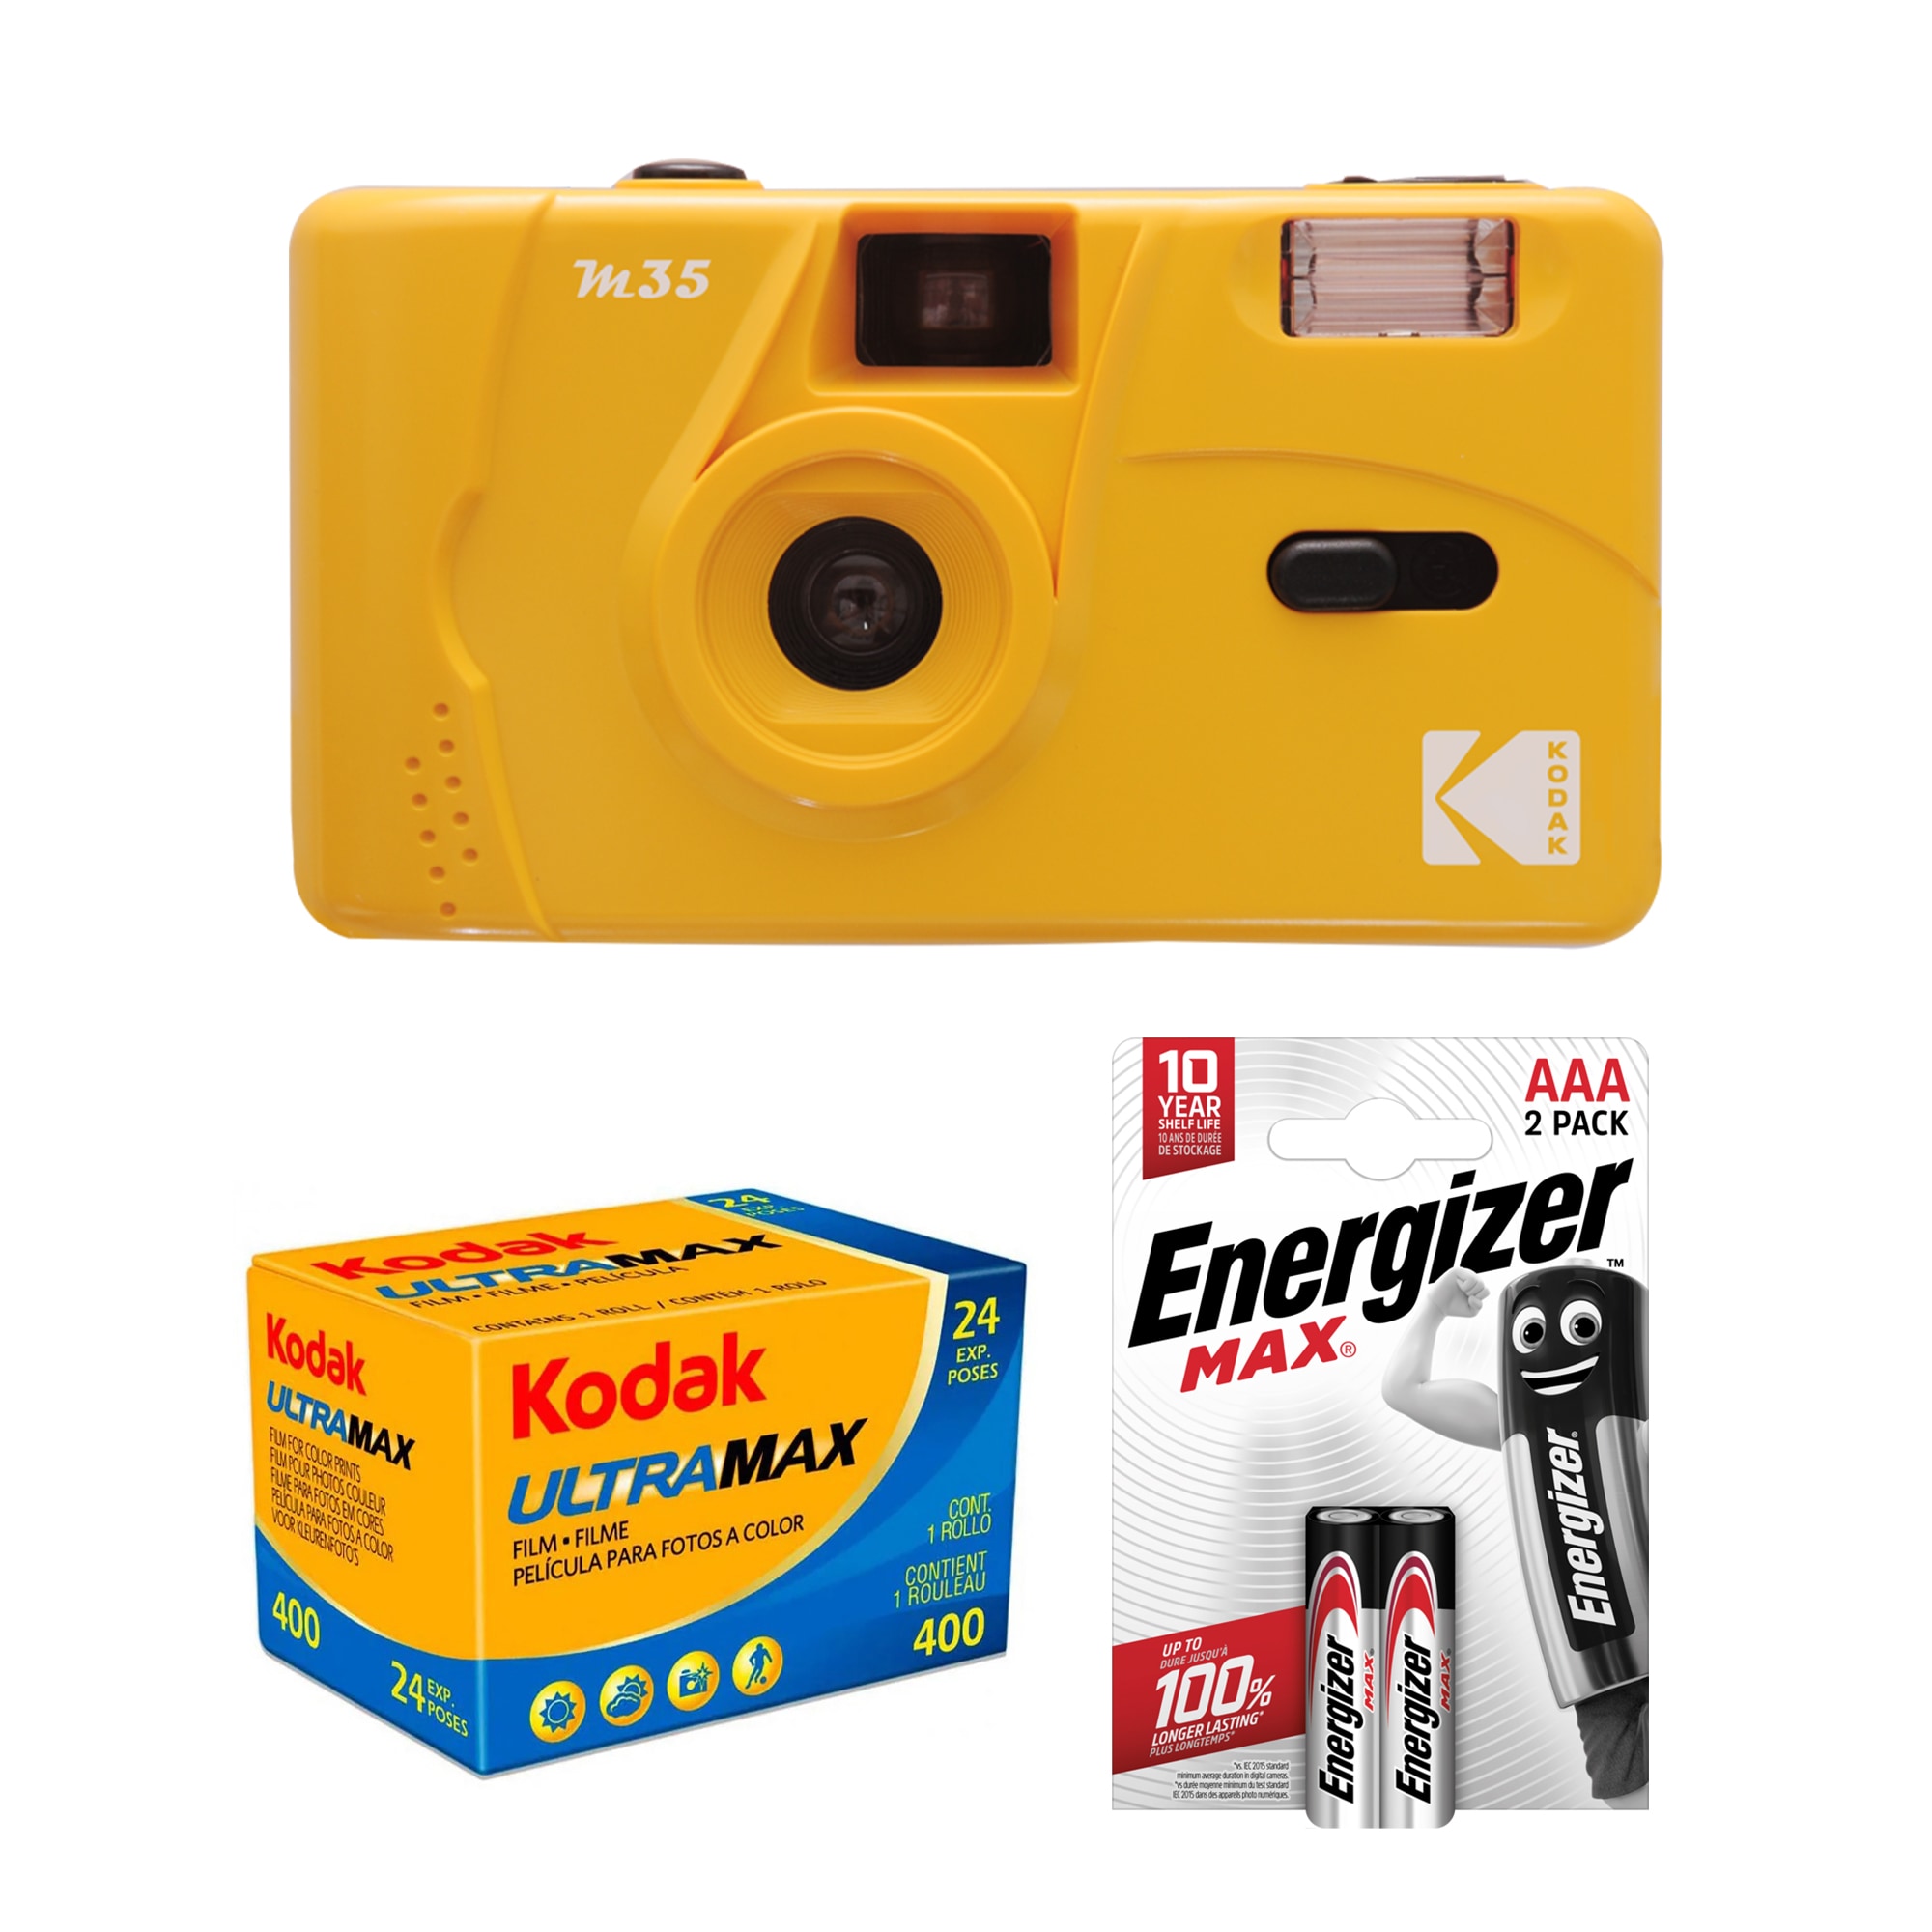 Tetenal Kodak M35 Reusable Camera Yellow + UltraMax 400 + 2st AAA batterier